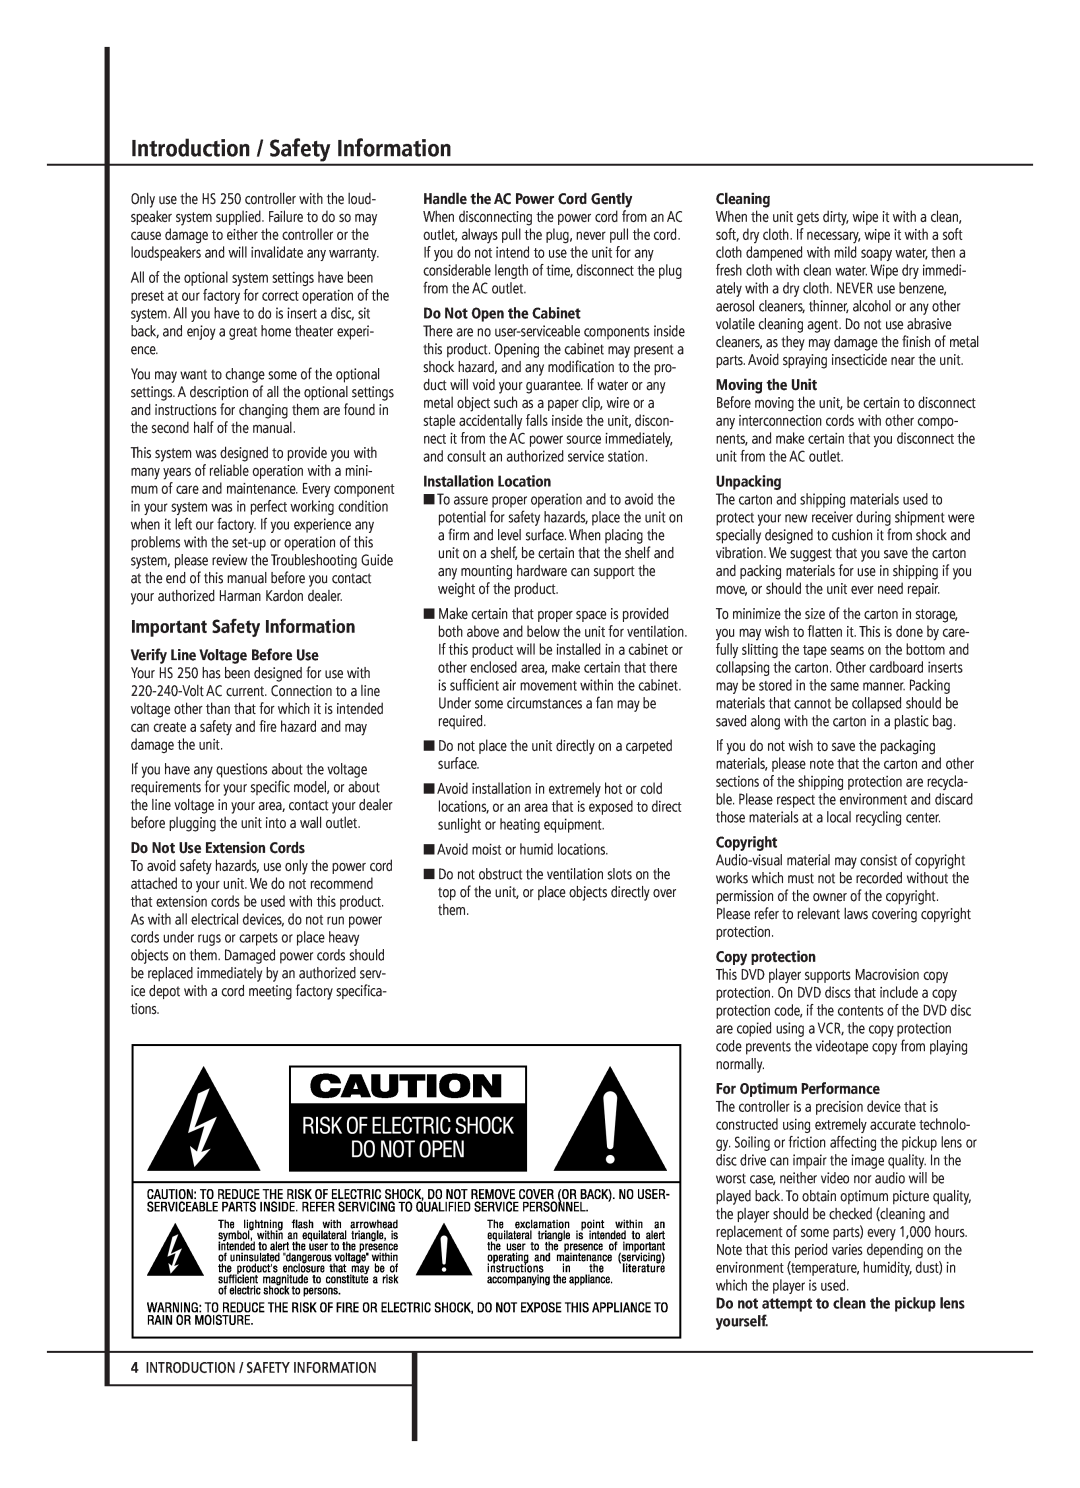 Harman-Kardon HS 250 owner manual Introduction / Safety Information, Important Safety Information 